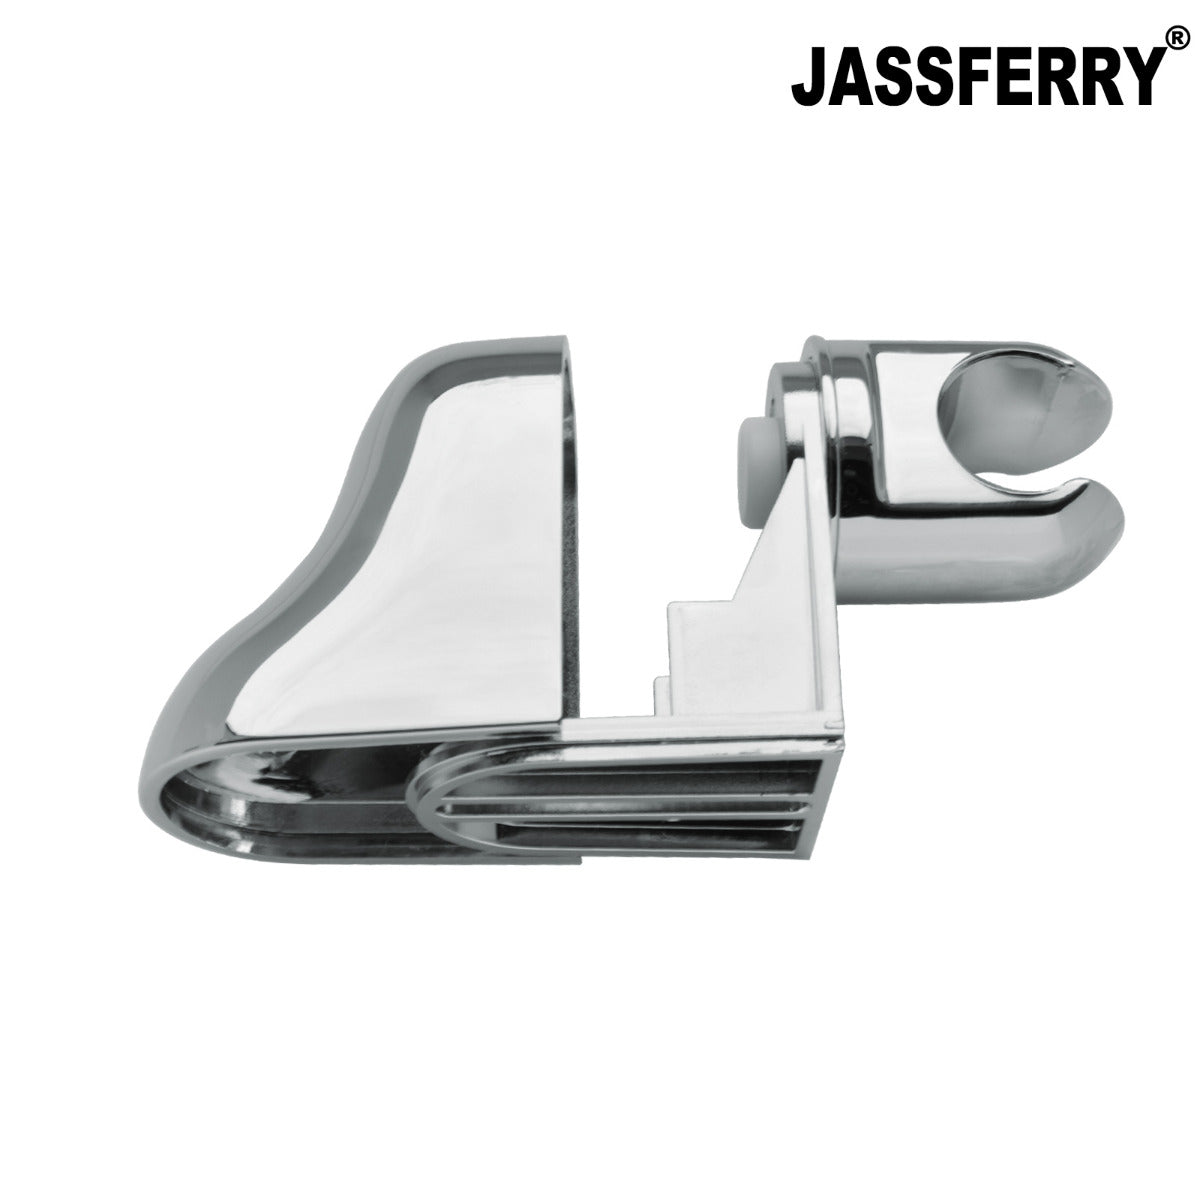 JassferryJASSFERRY New Adjustable Wall Bracket Shower Heads Hose Holder Swivel ChromeShower Heads